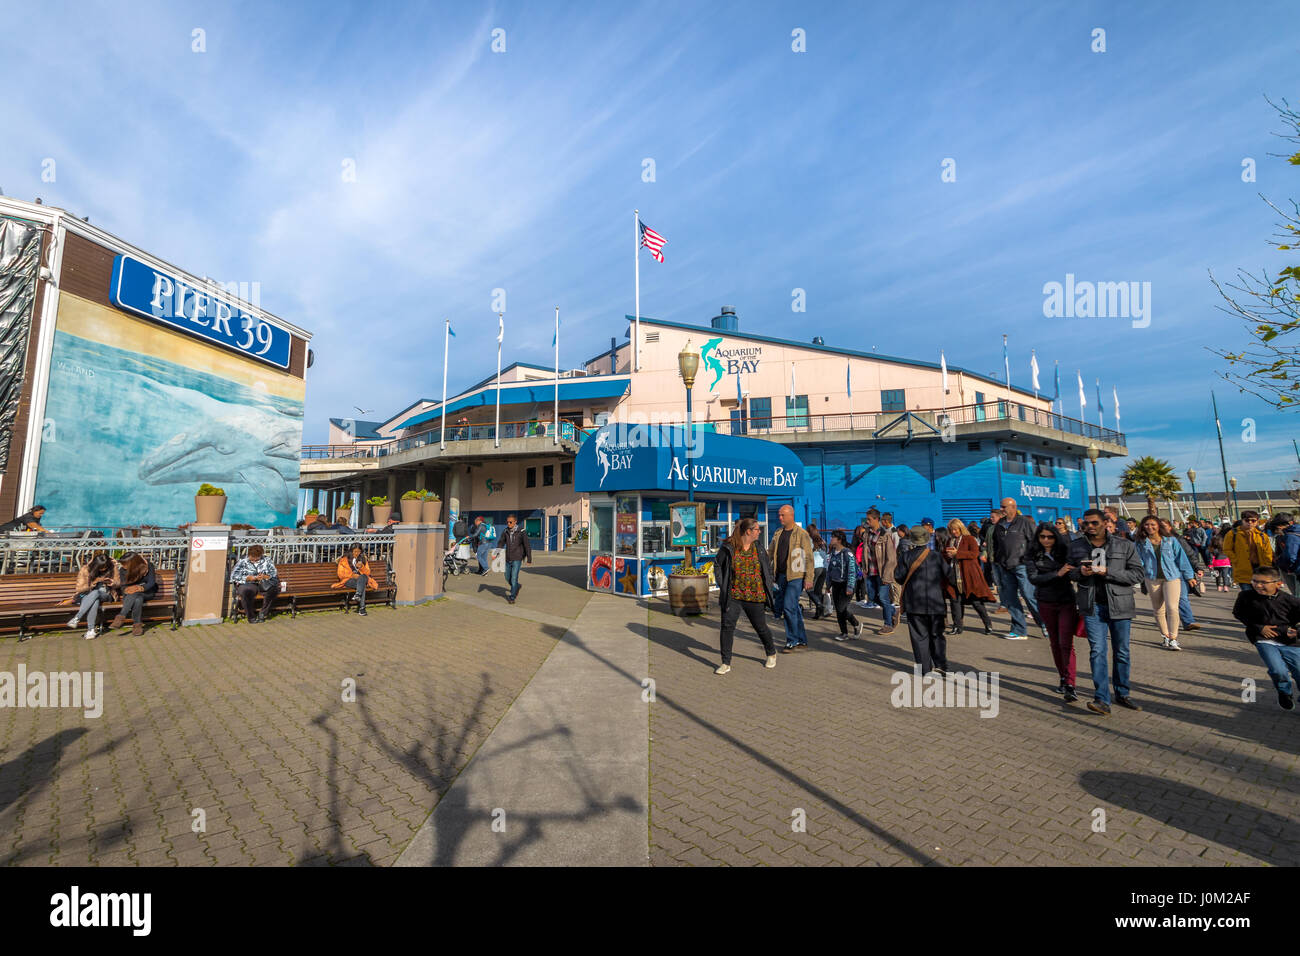 Pier 39 and Aquarium of the Bay in Fishermans Wharf - San Francisco, California, USA Stock Photo